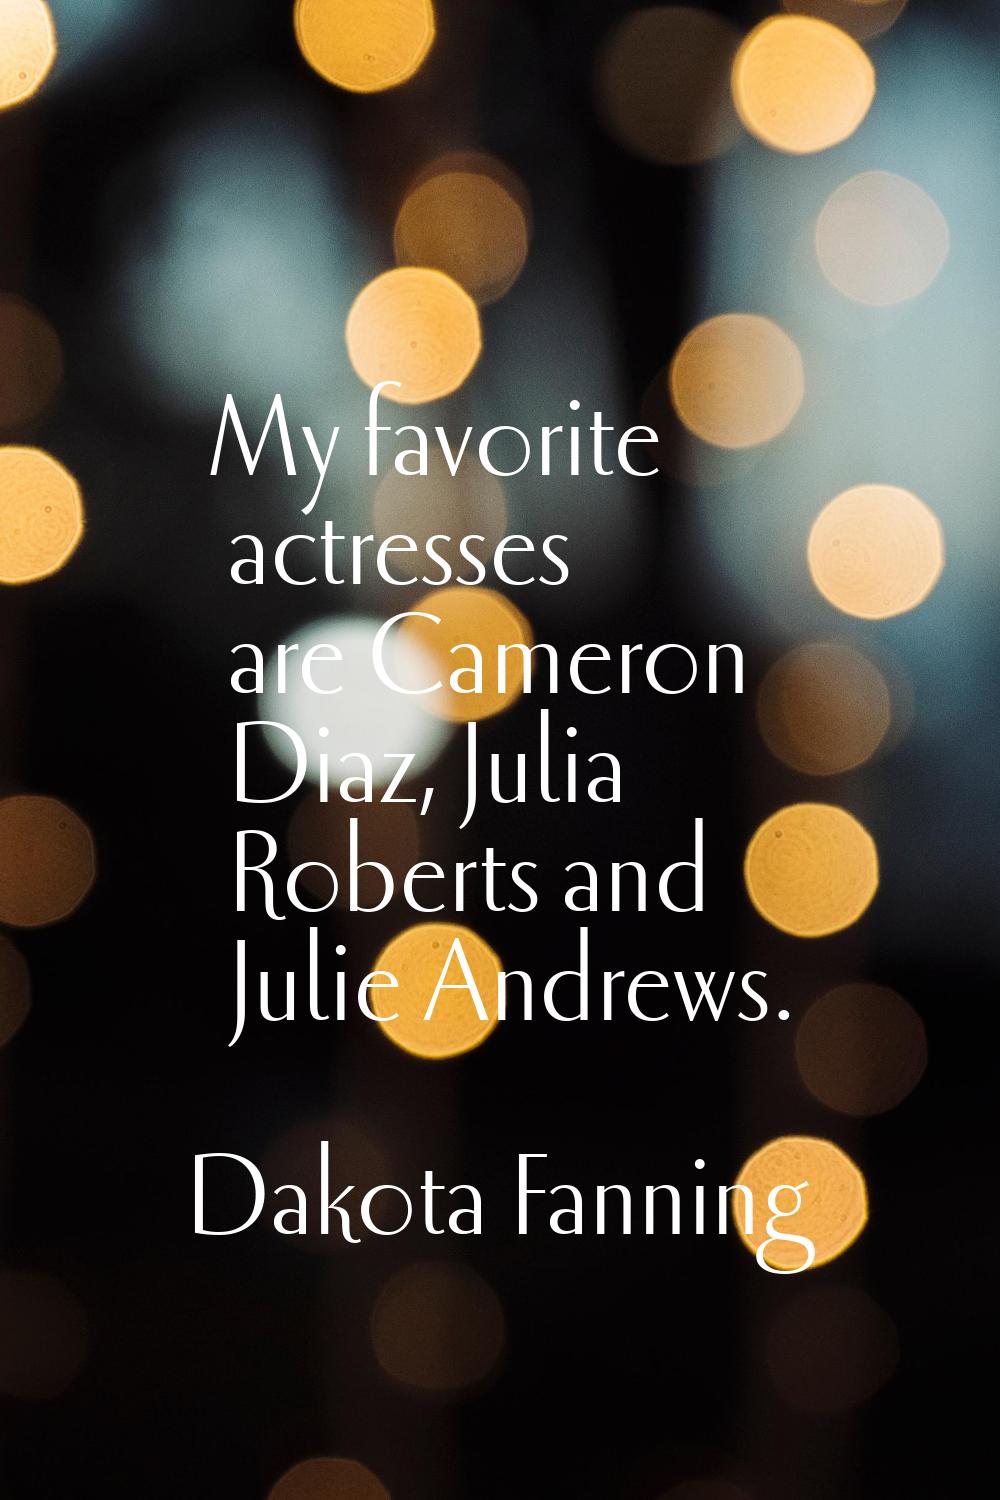 My favorite actresses are Cameron Diaz, Julia Roberts and Julie Andrews.